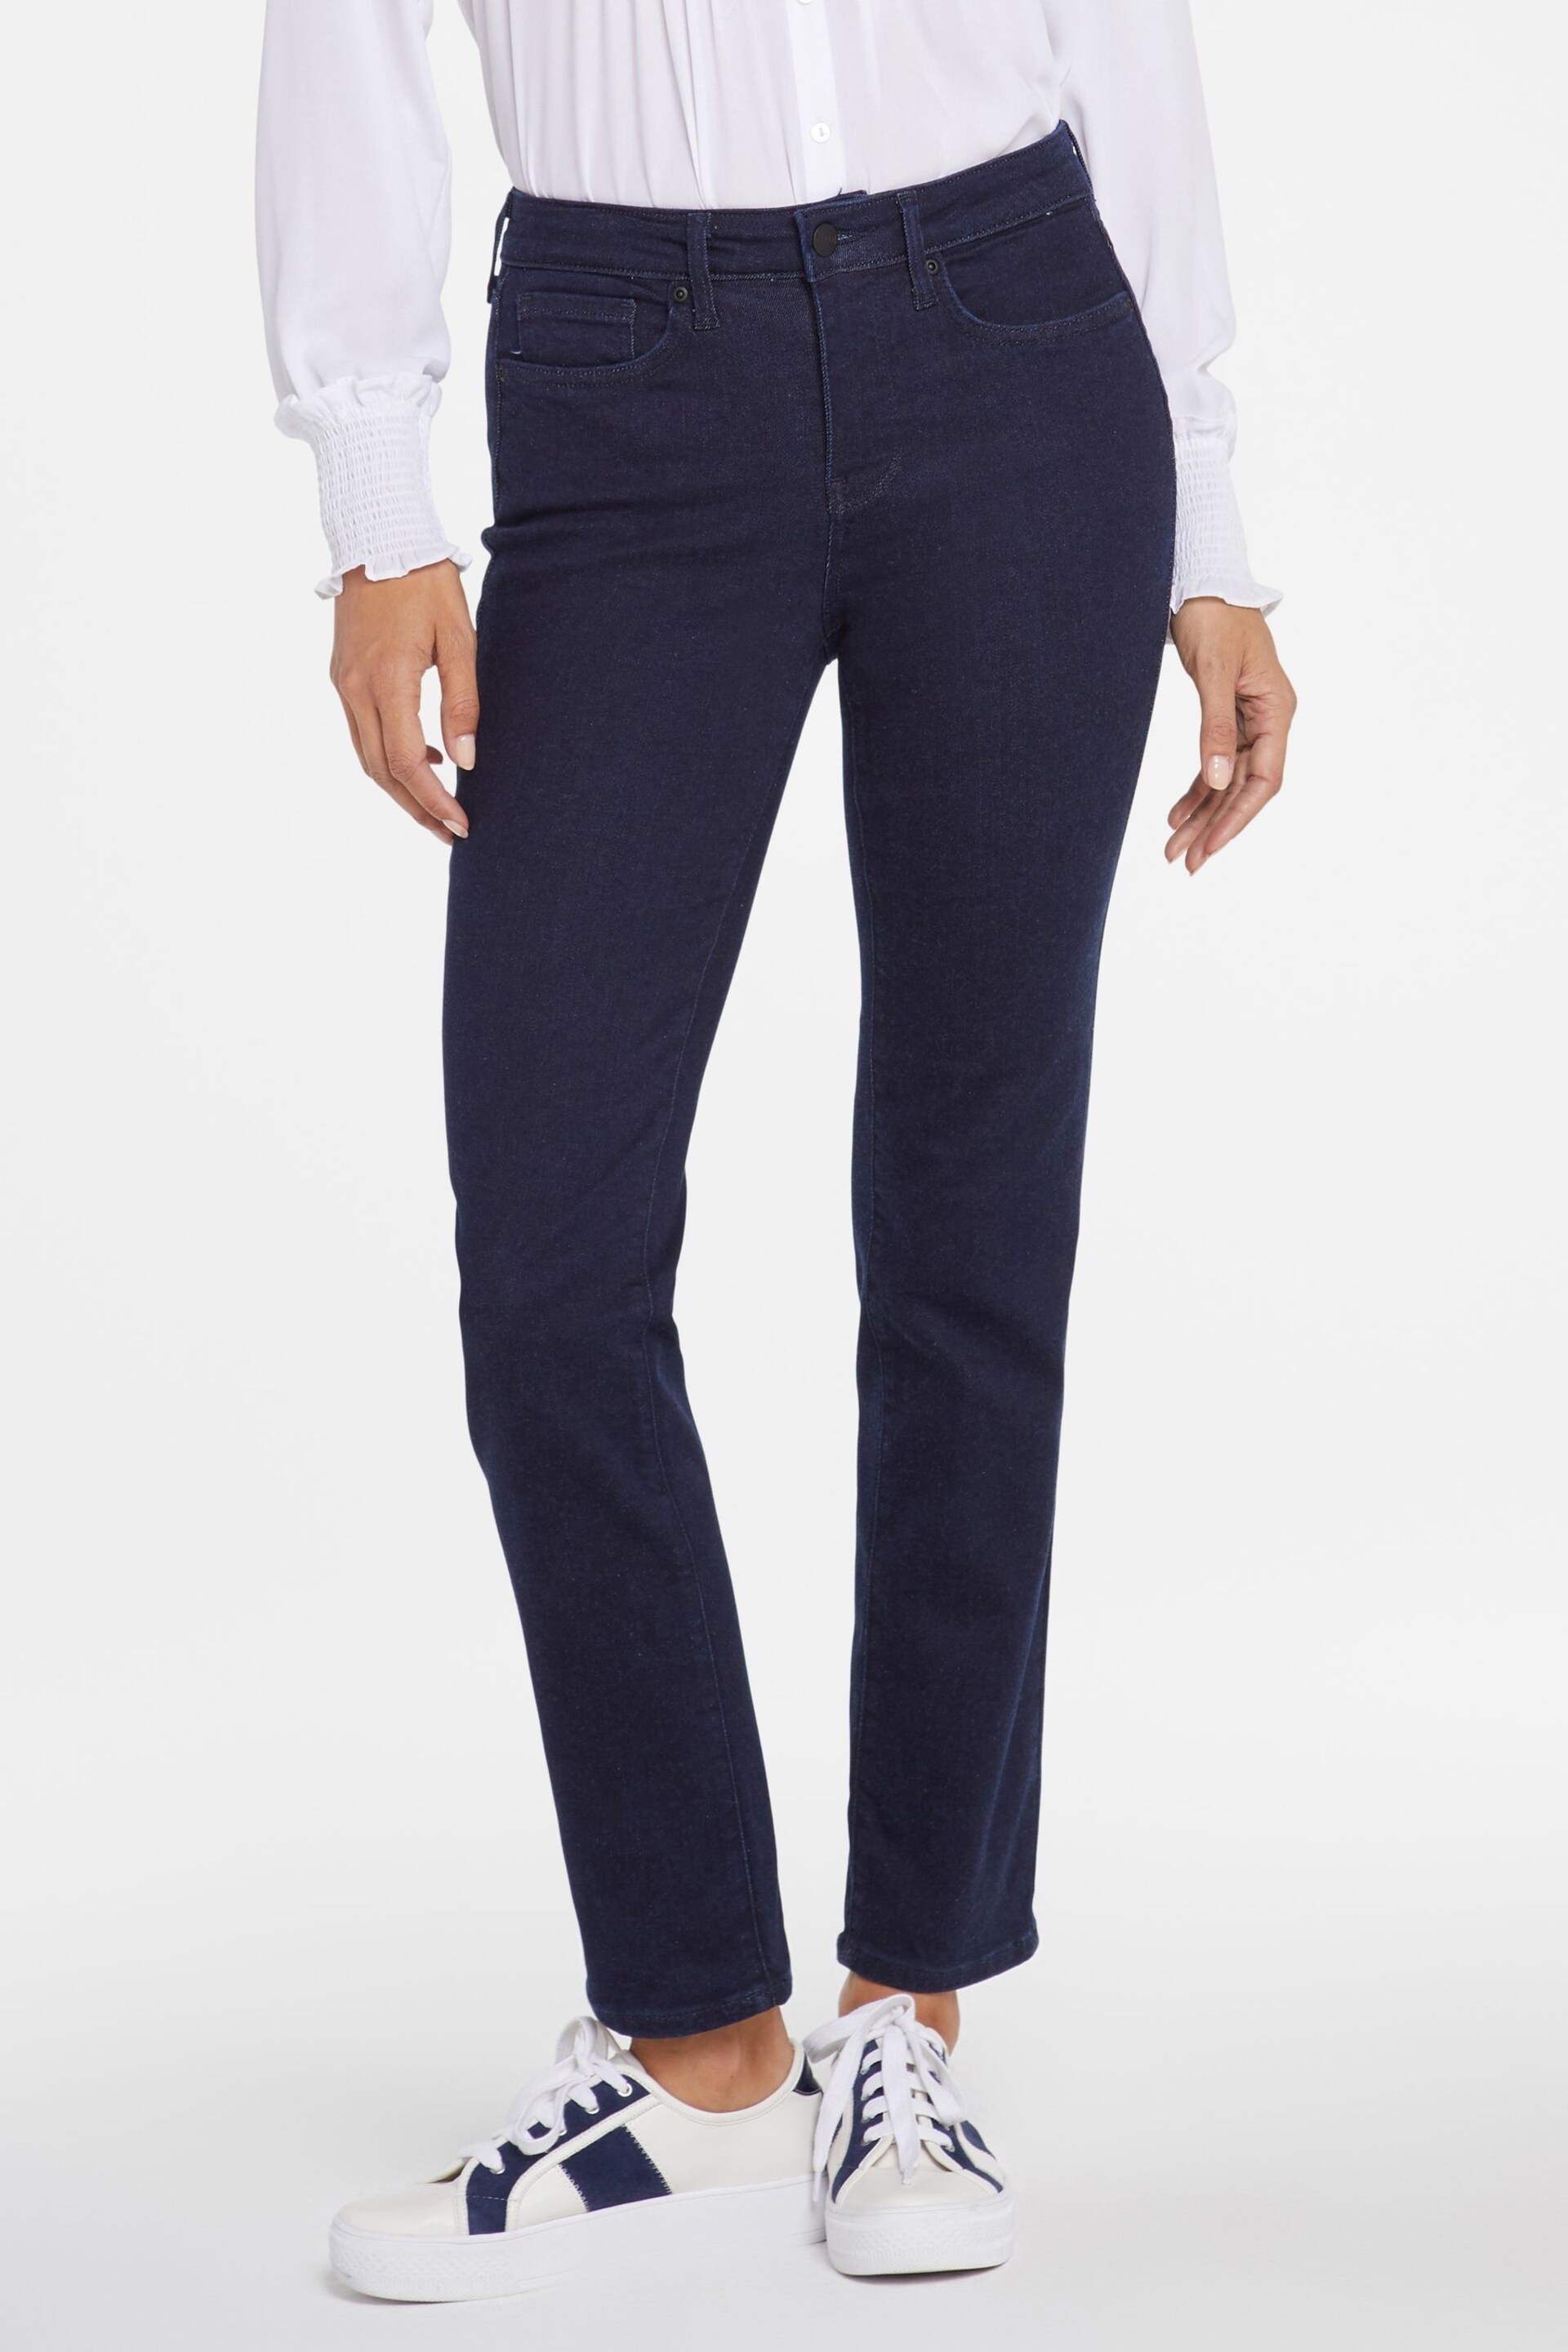 NYDJ Blue Sheri Slim Jeans - Image 1 of 3